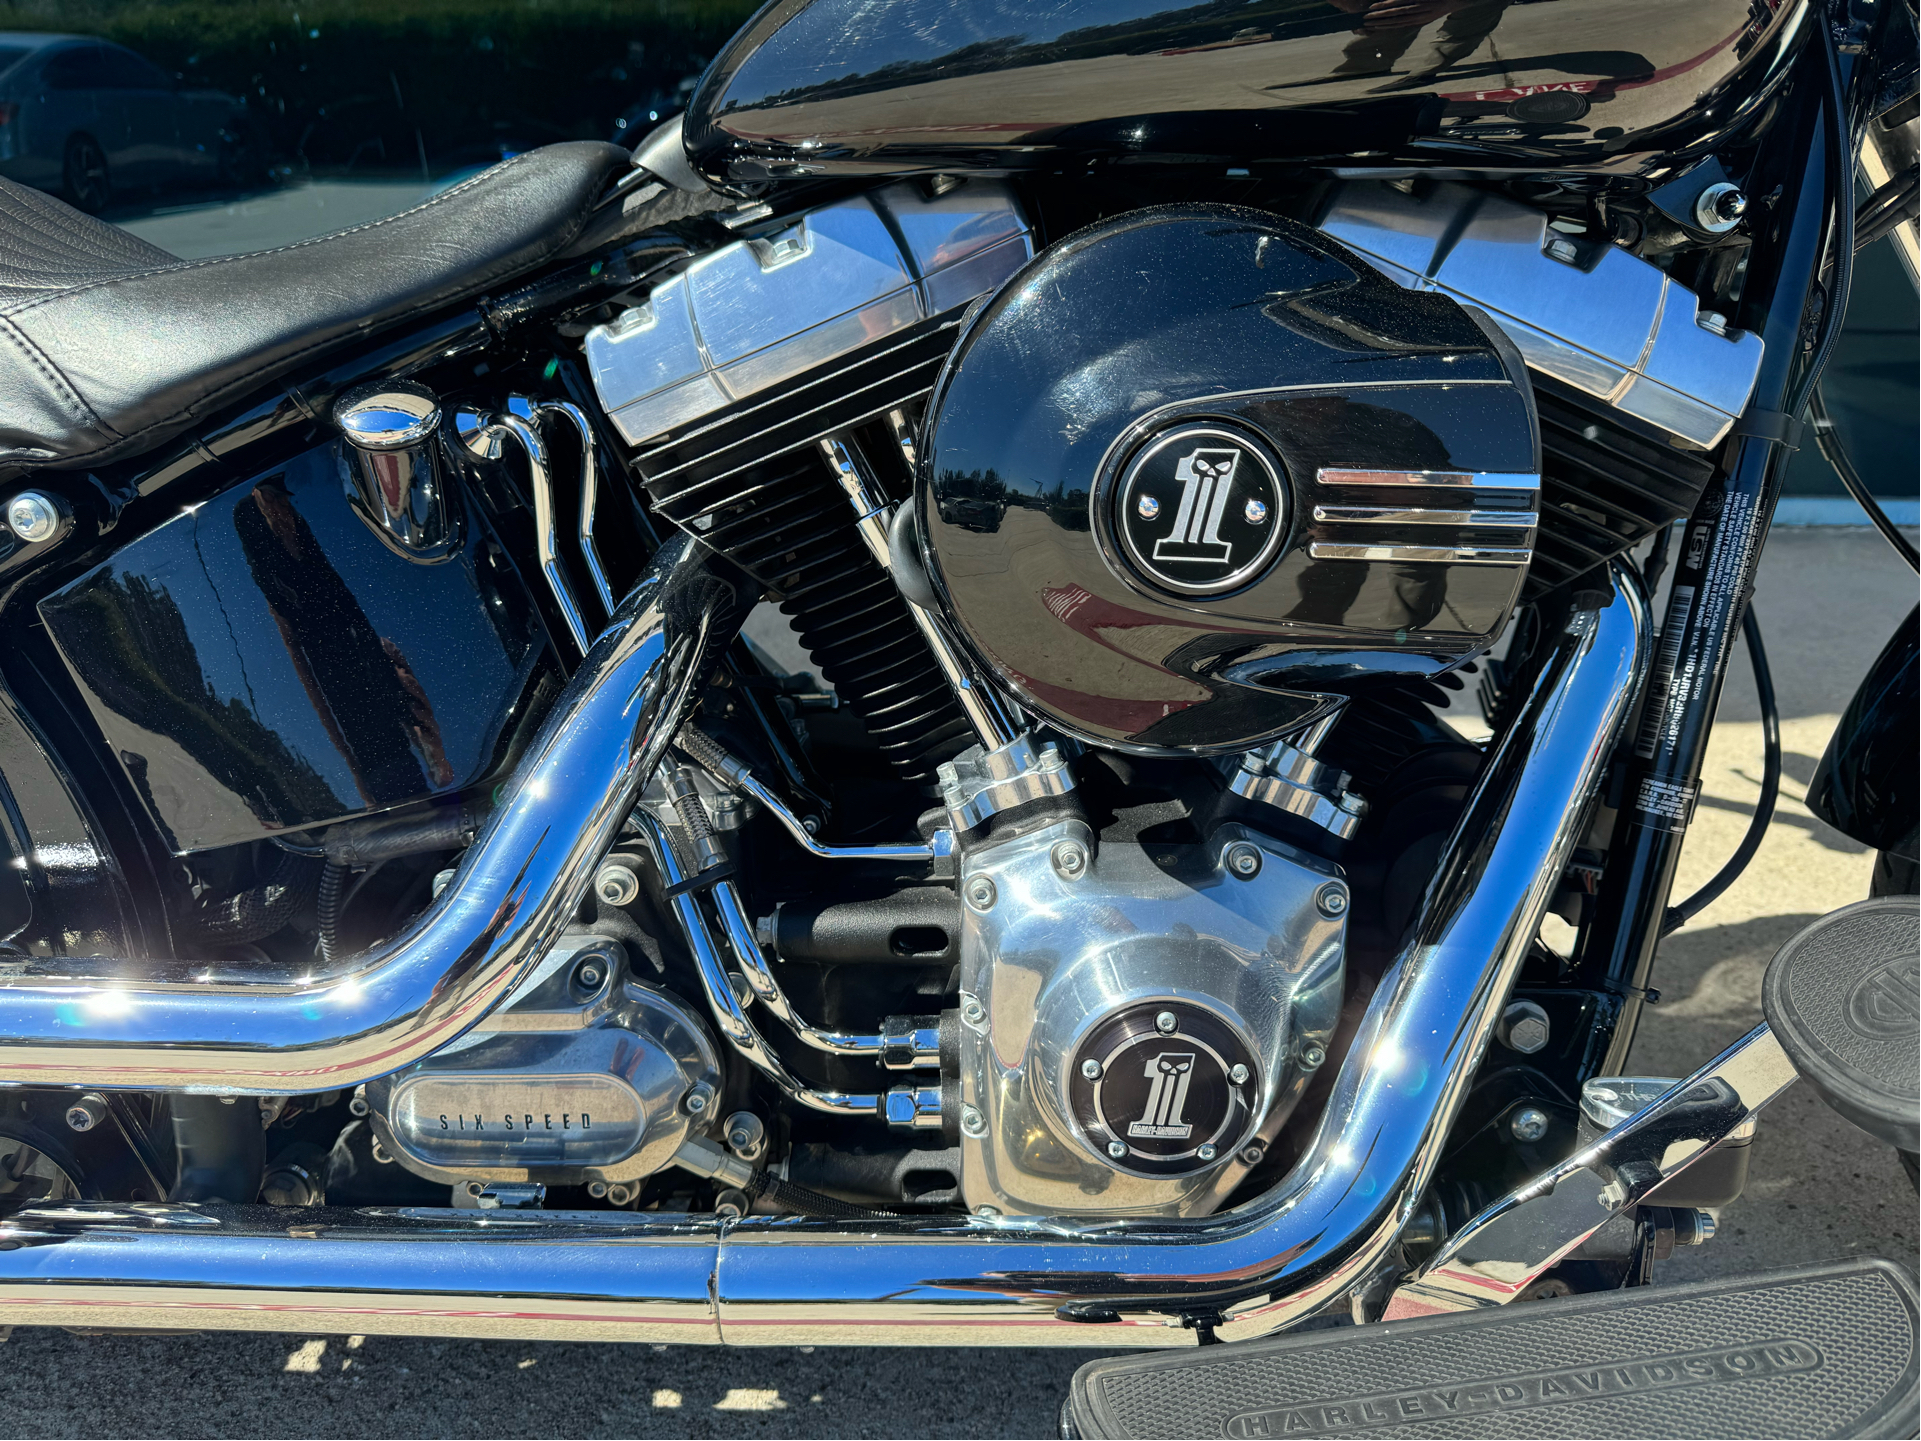 2017 Harley-Davidson Softail Slim® in Temecula, California - Photo 2